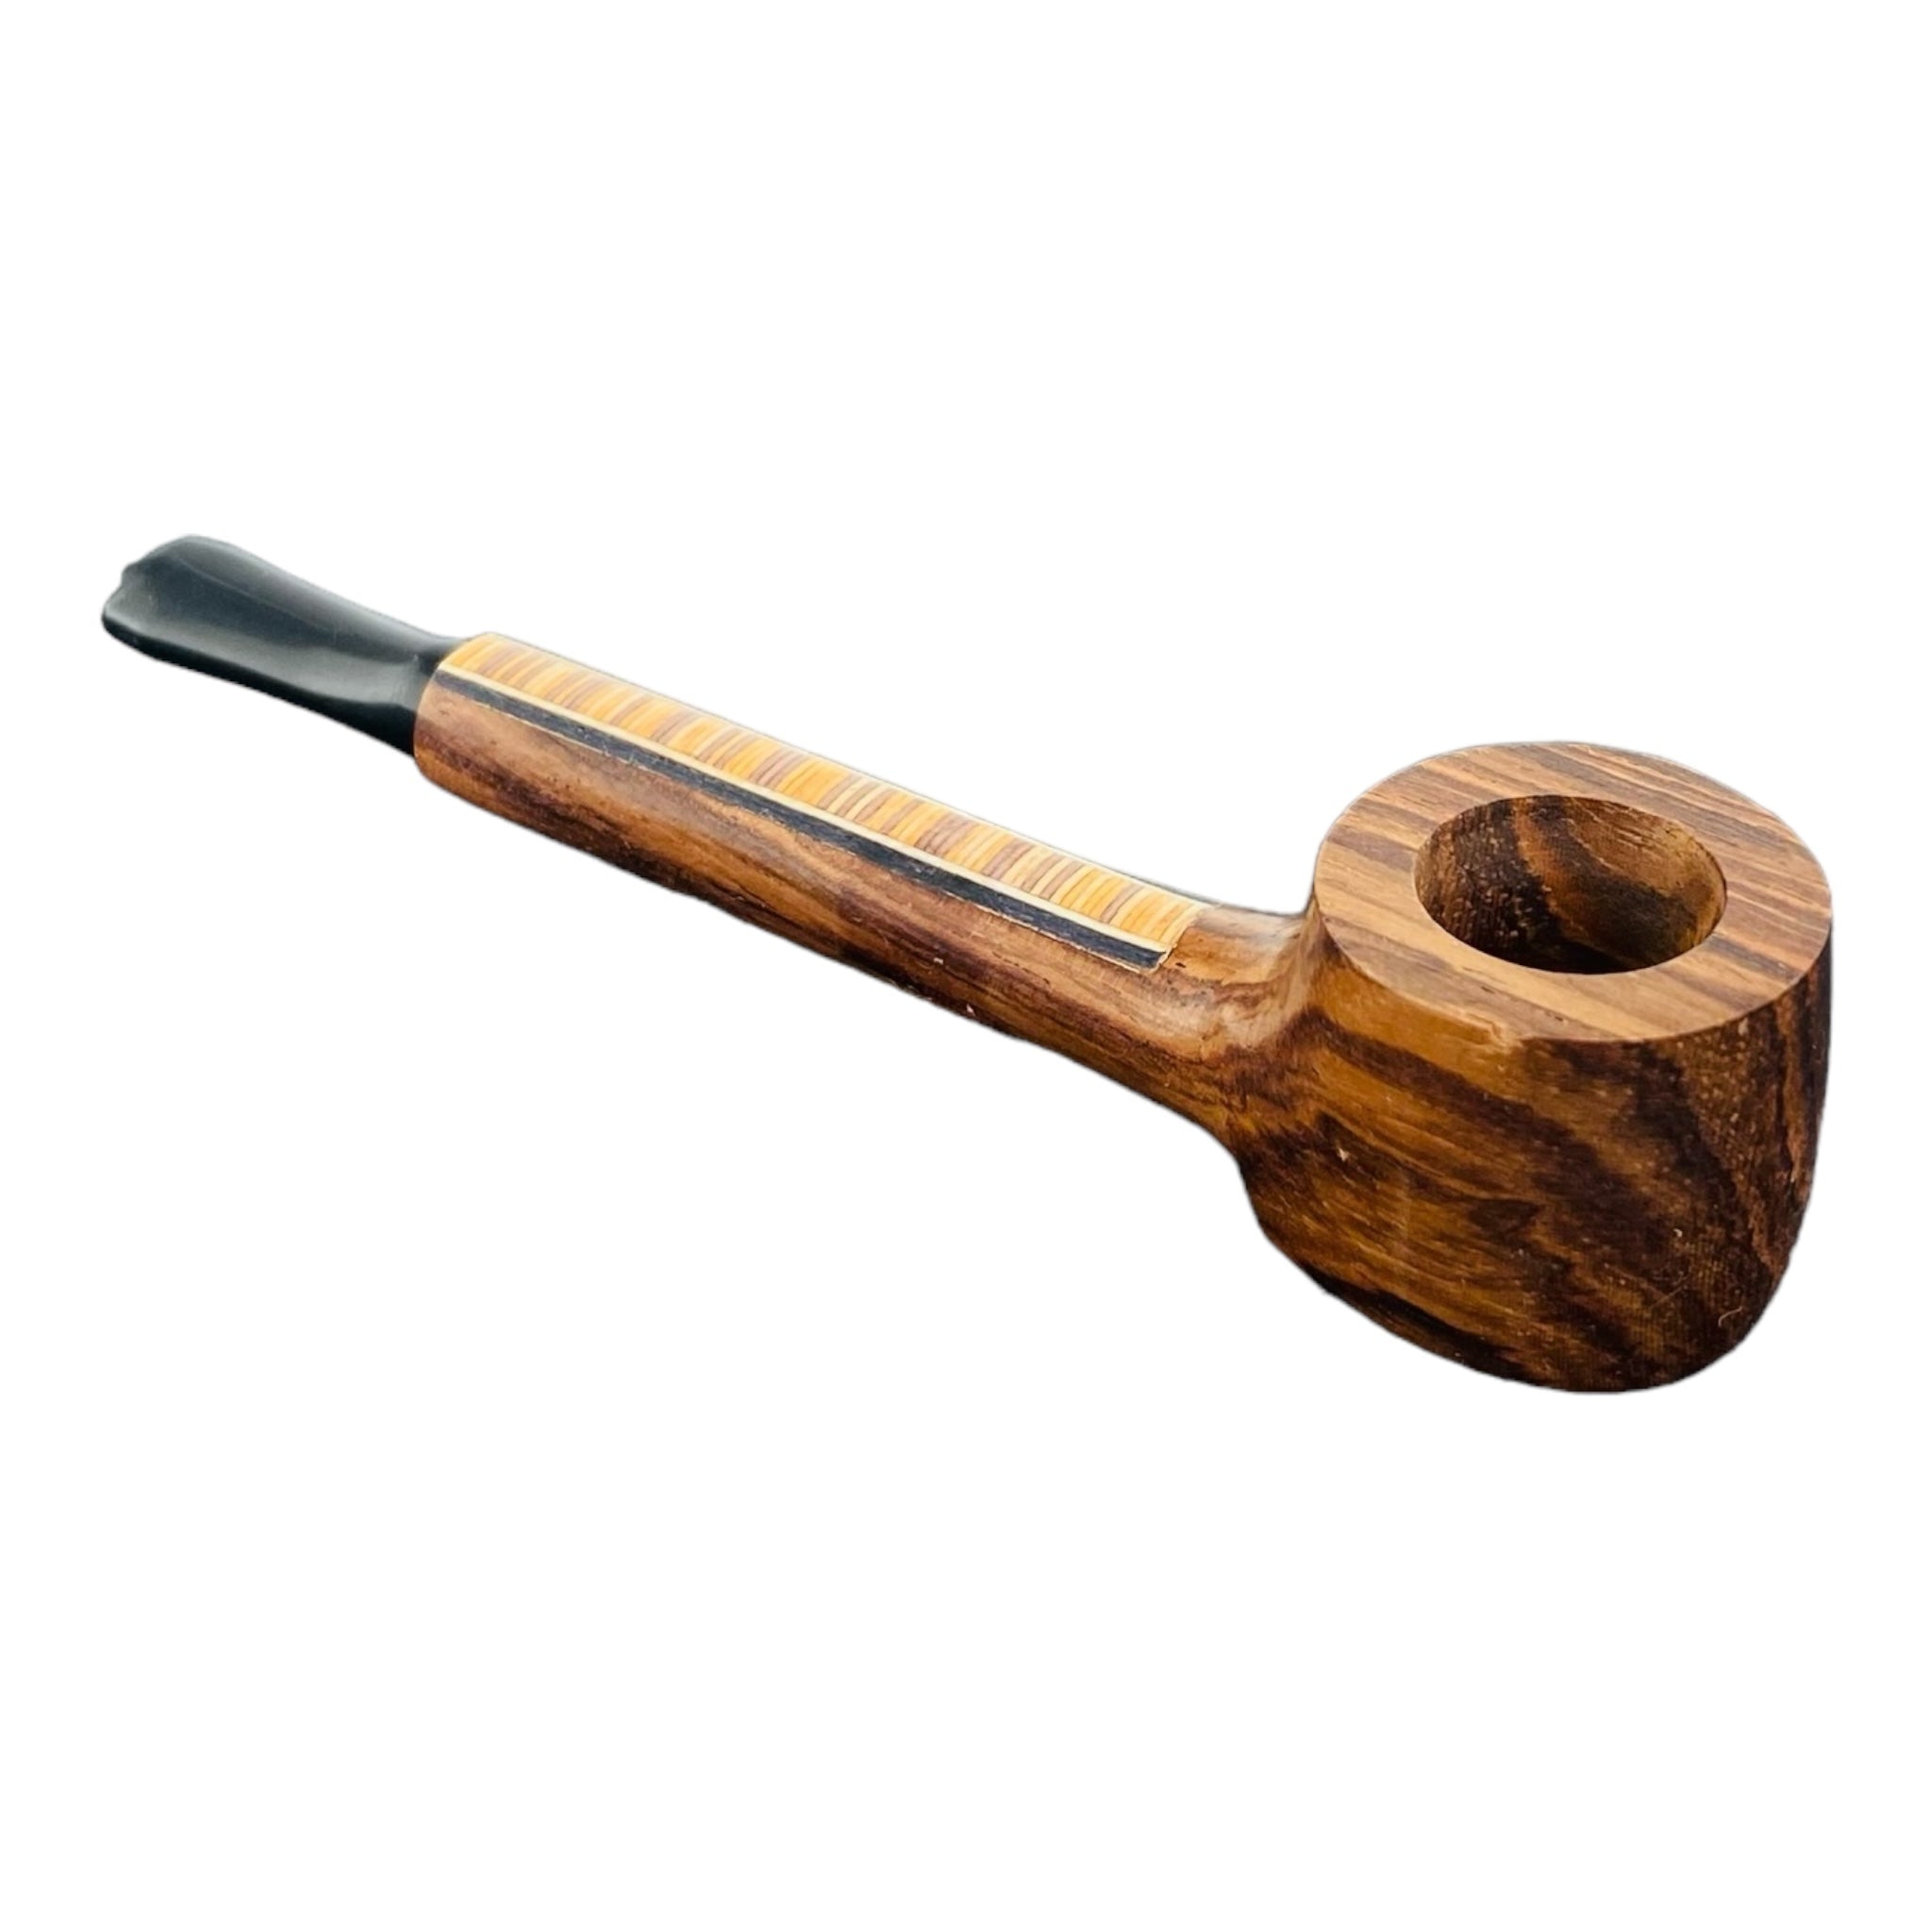 wooden corn cobb pipe style smoking pipe